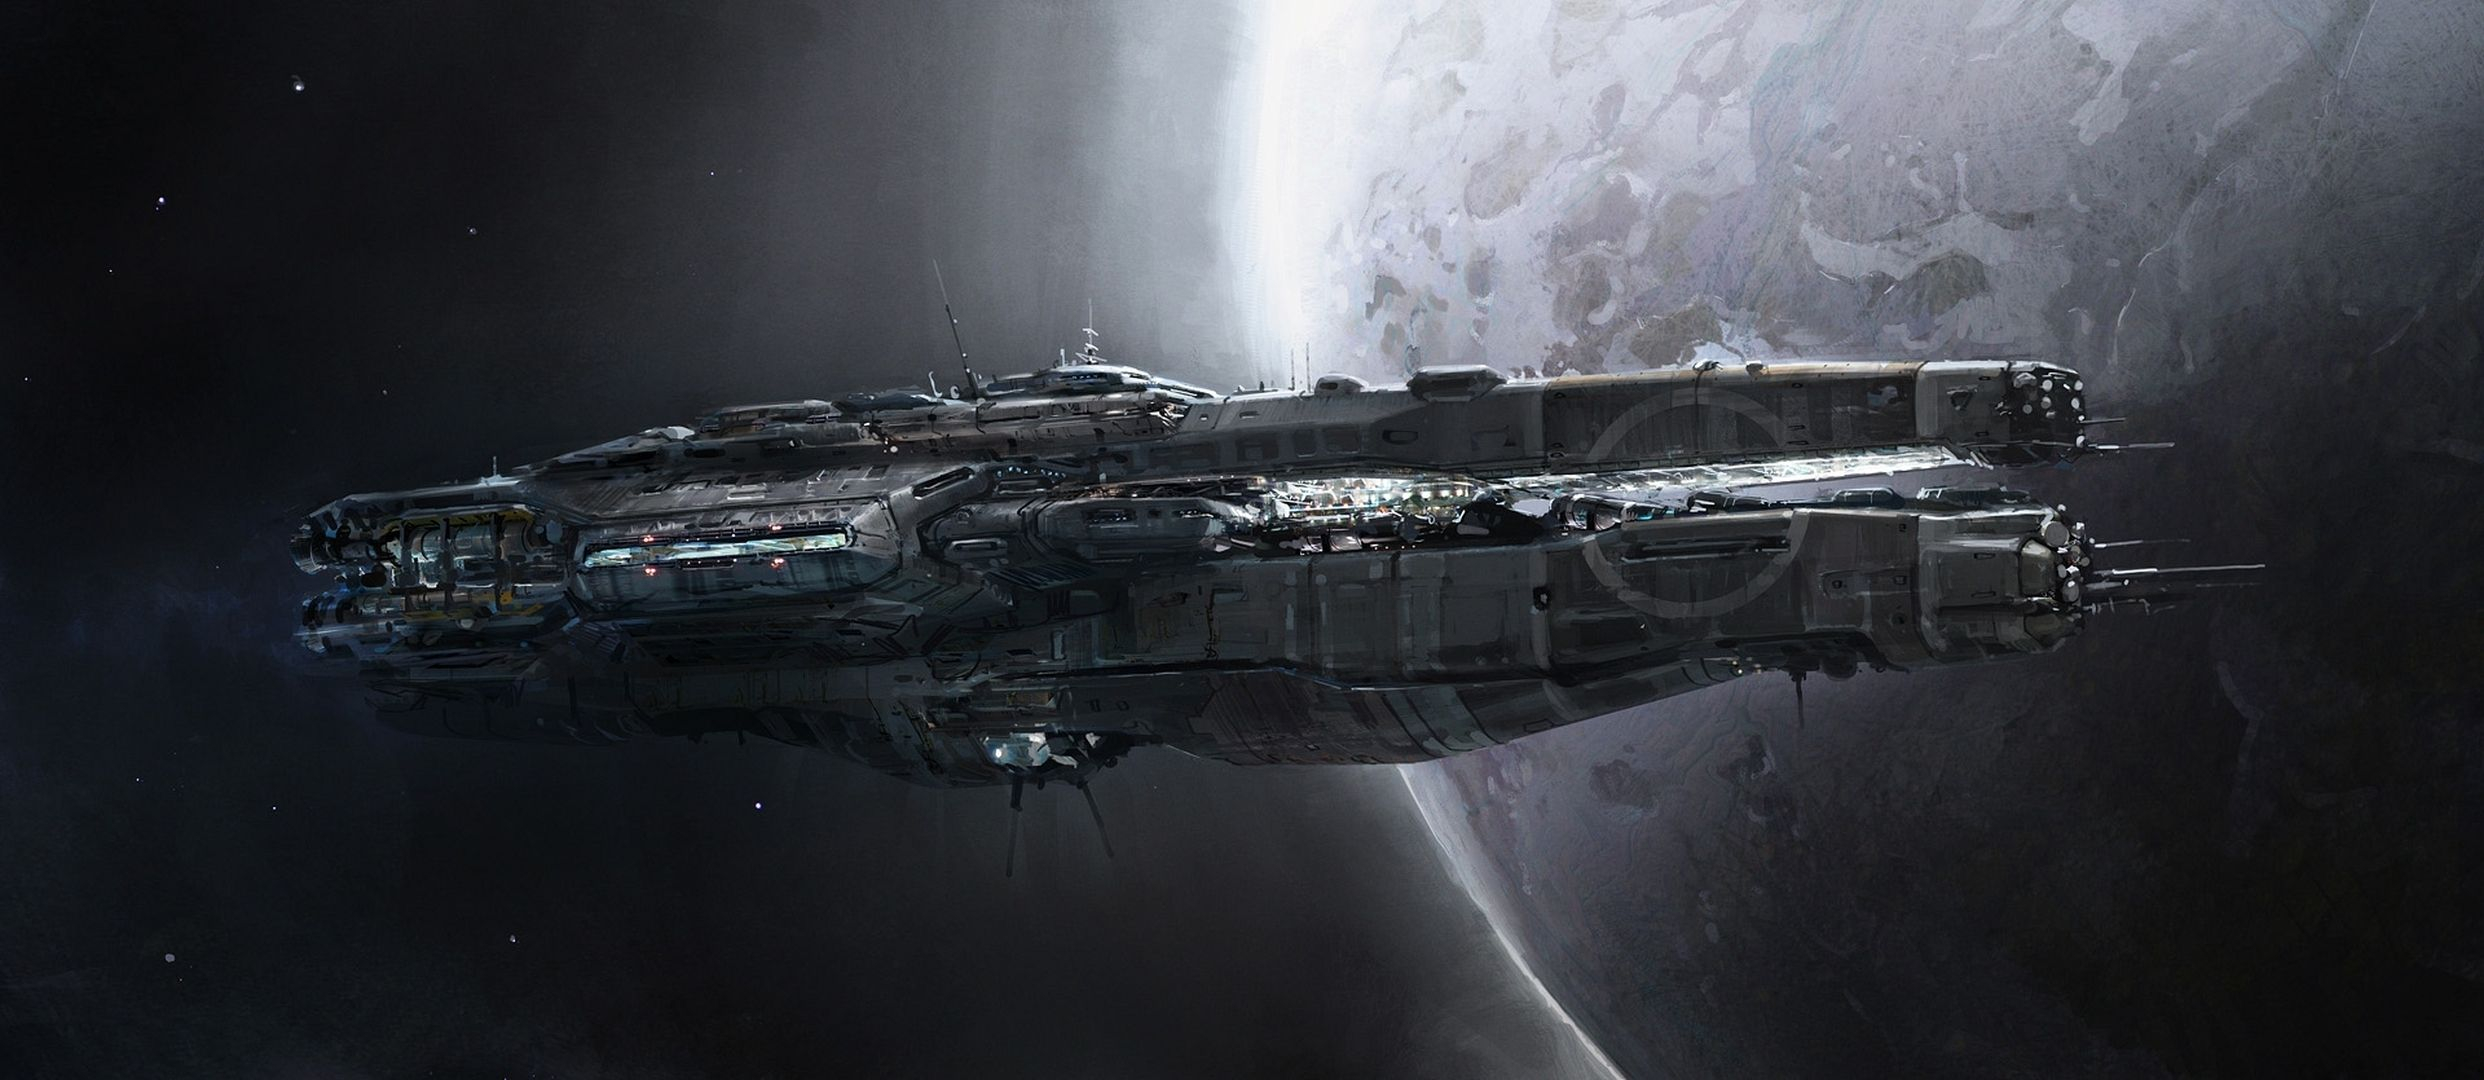 2484x1080 Sci Fi Spaceship Wallpaper | Concept ships, Sci fi wallpaper, Spaceship art